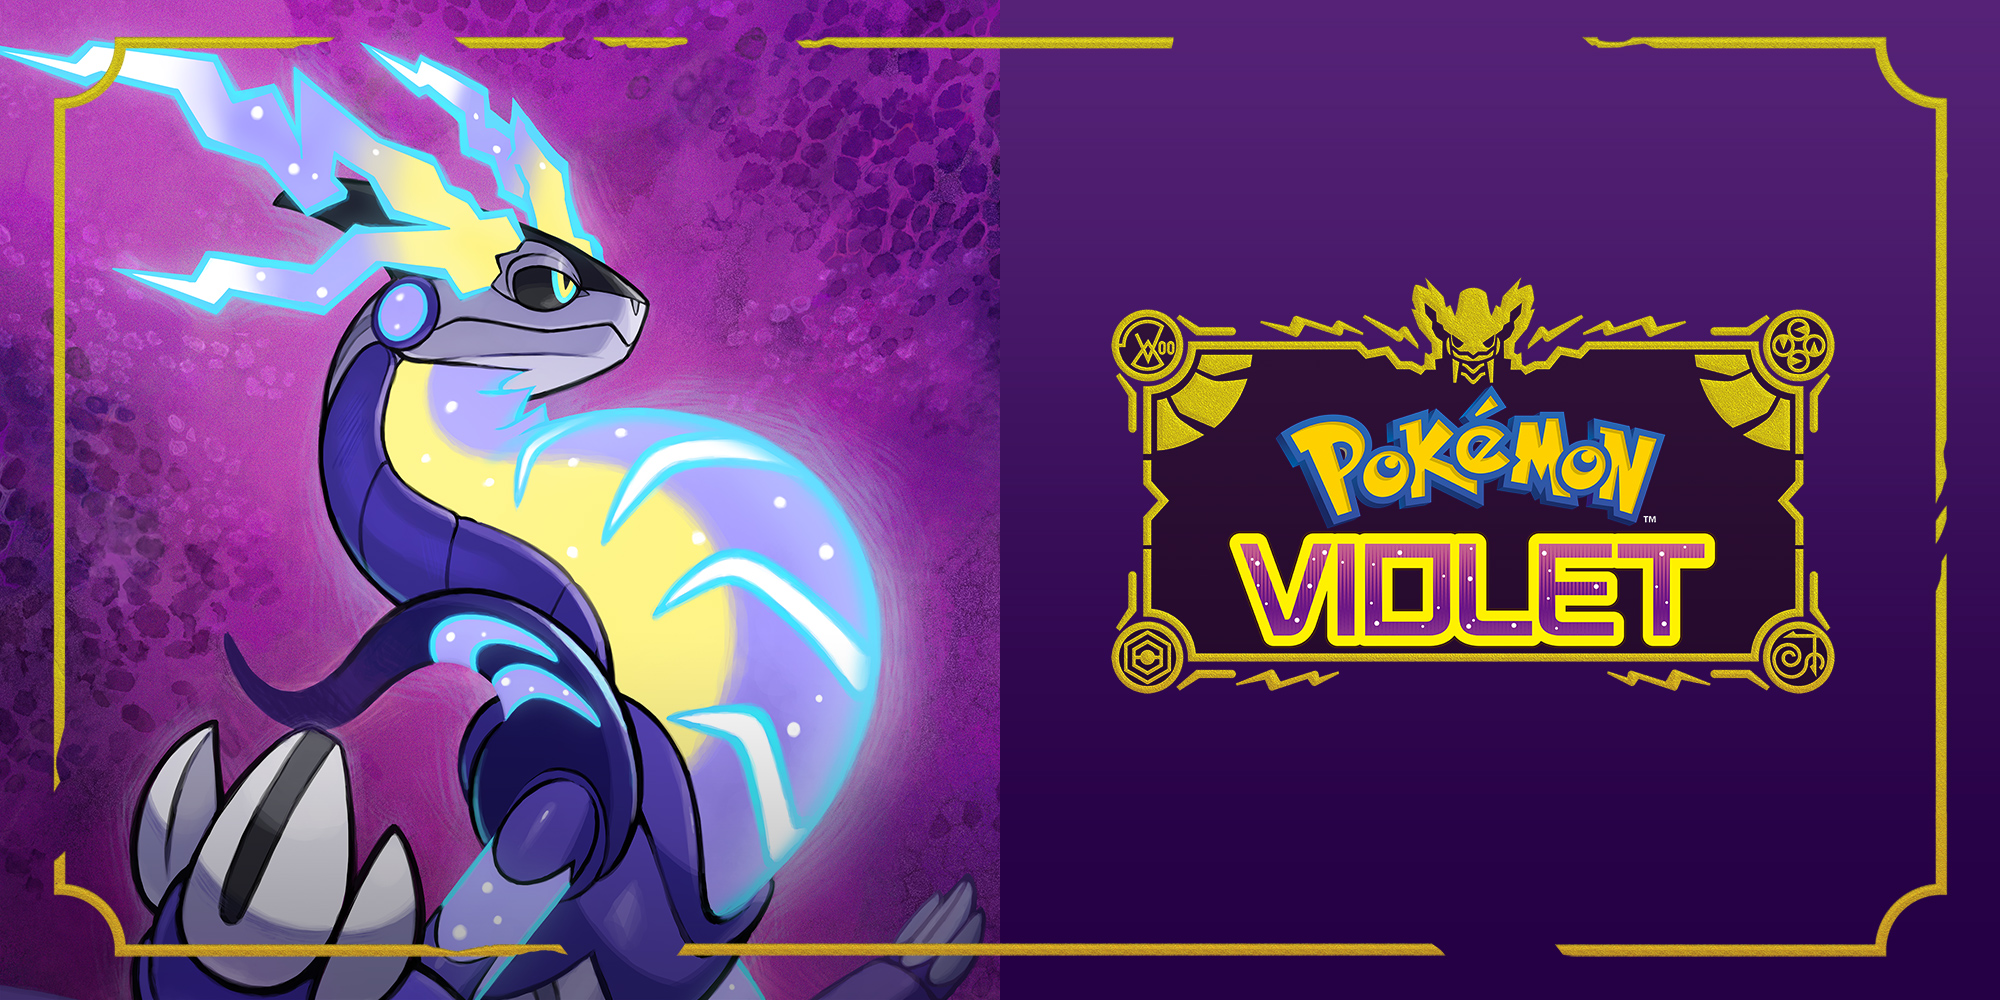 Pokémon Scarlet/Violet (Switch): Guia de campanha - Parte 1